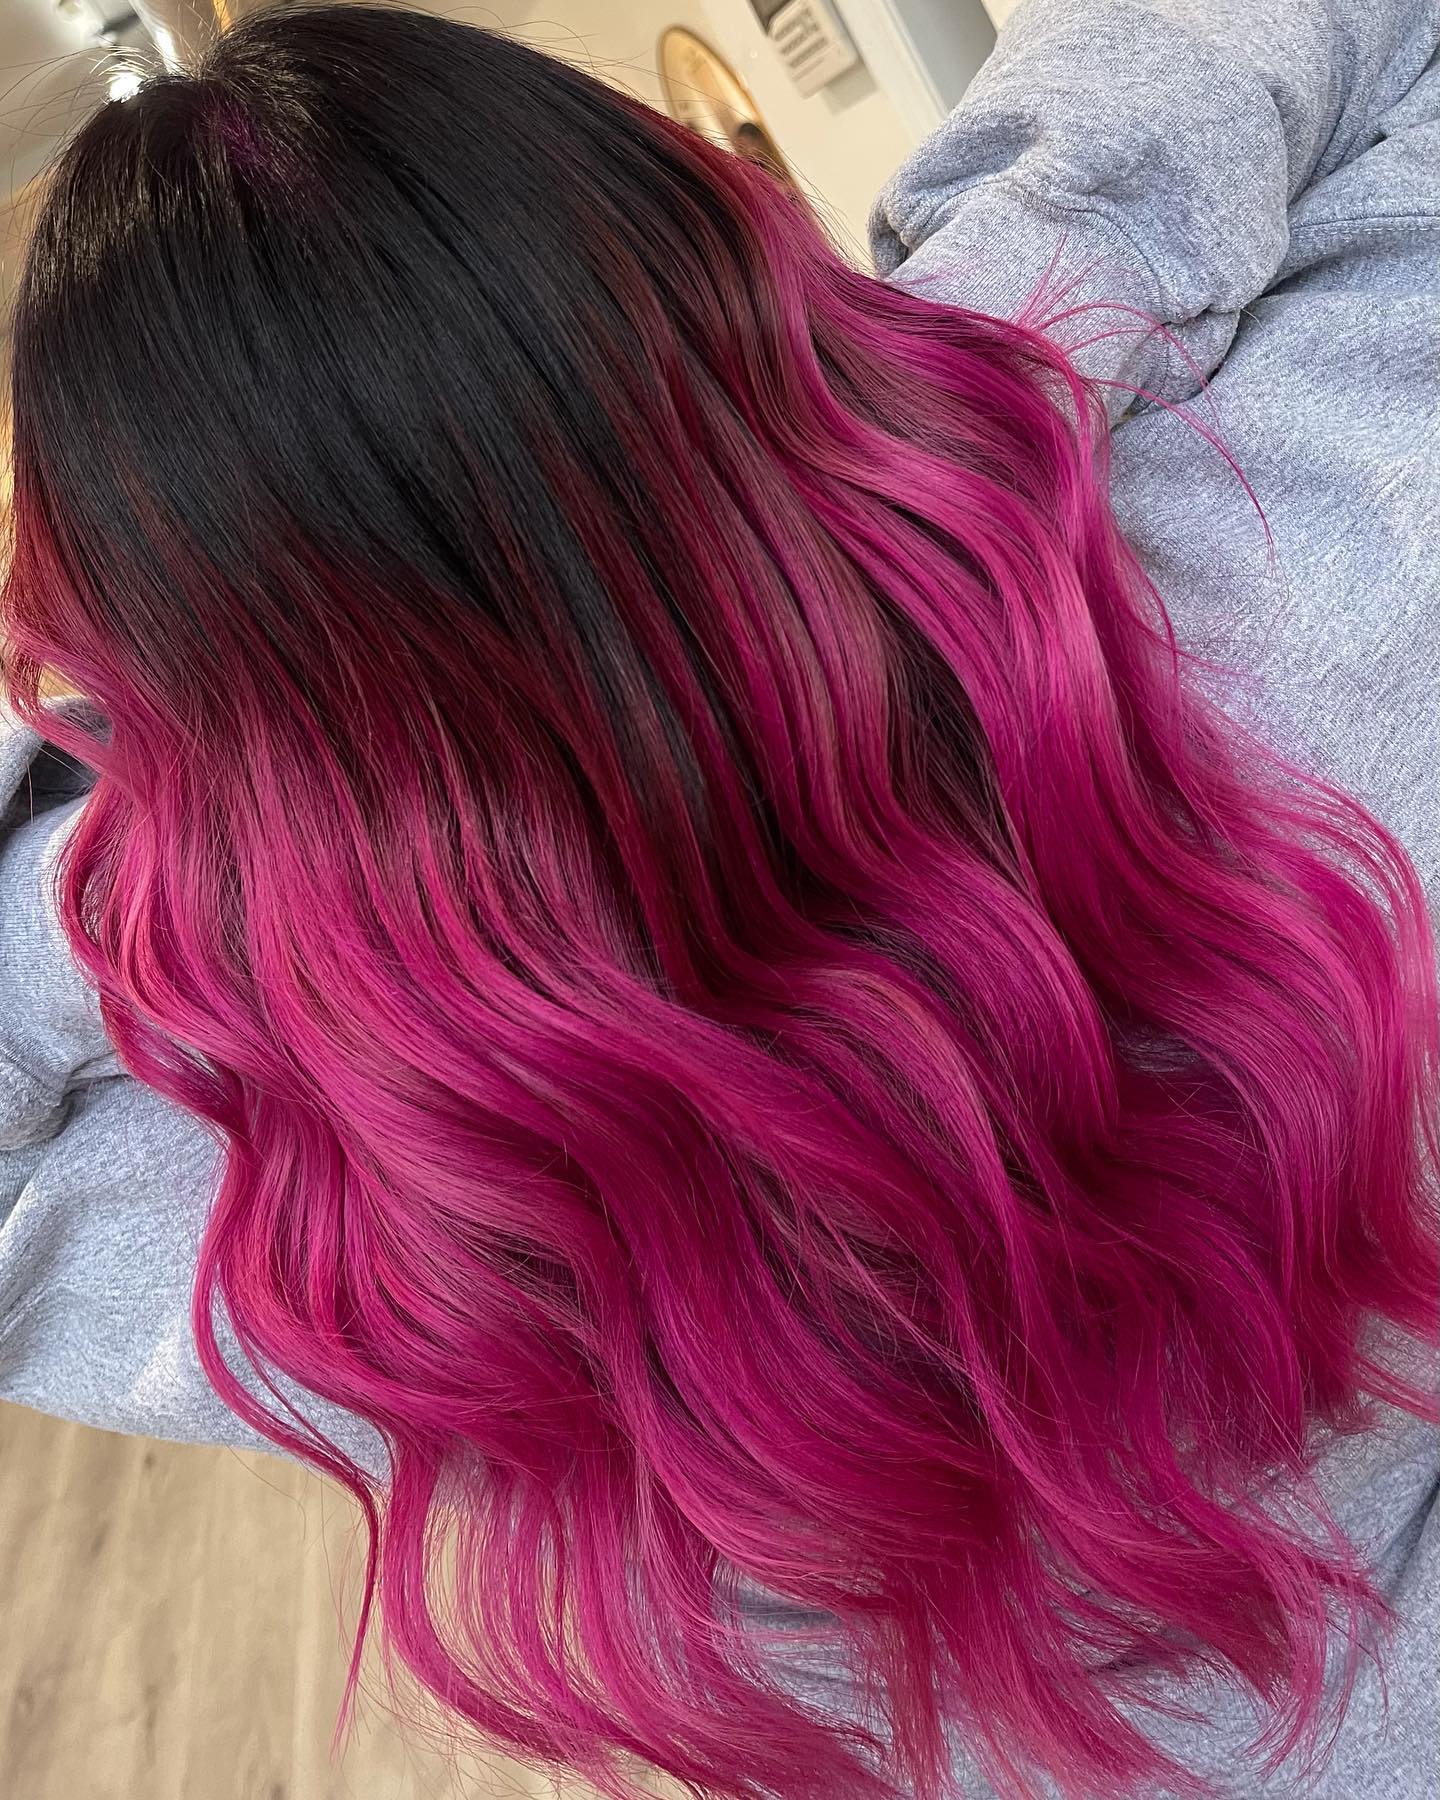 275725775 390525922426486 5108285080355233196 n - Ombré hair rosa: 60 inspirações, trends